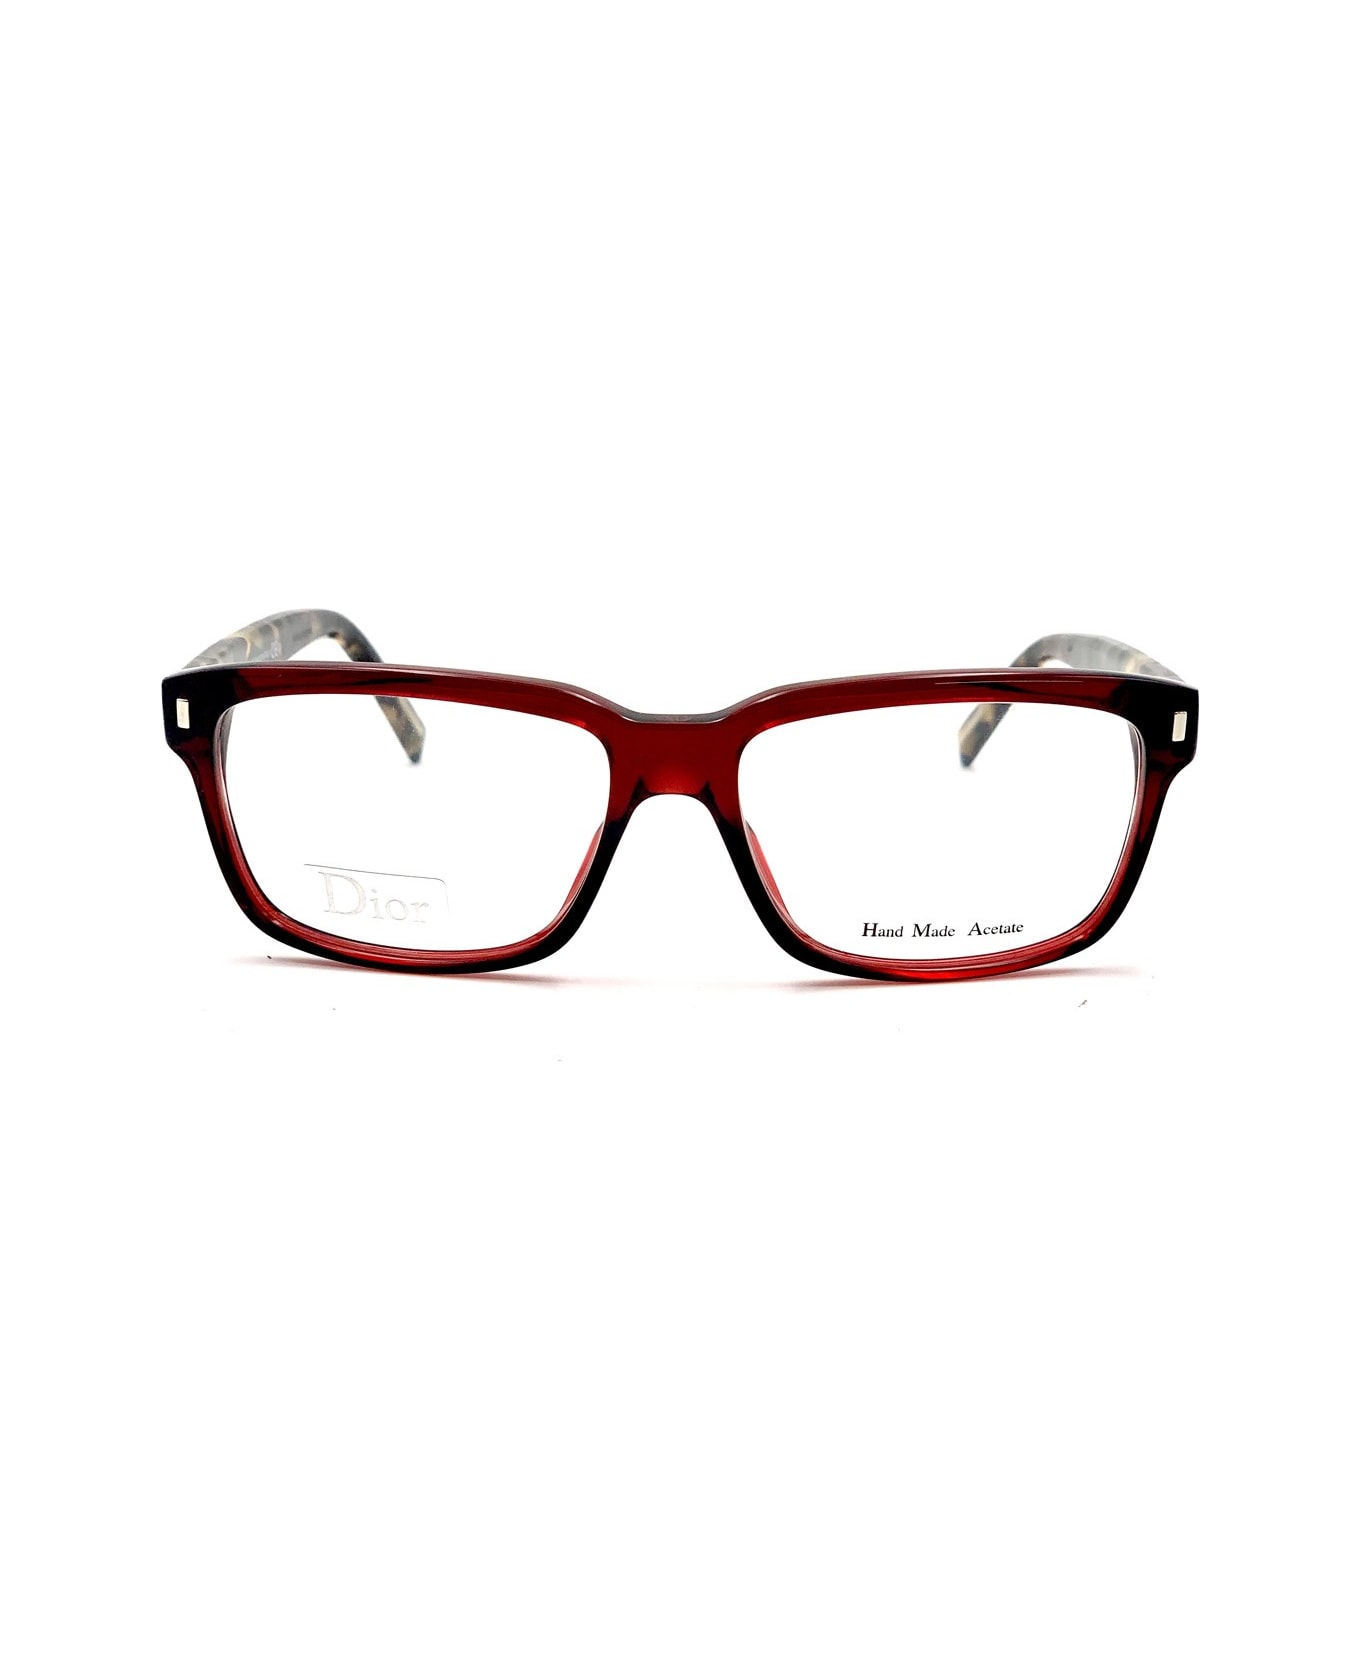 Dior Eyewear Blacktie159 Glasses - Rosso アイウェア